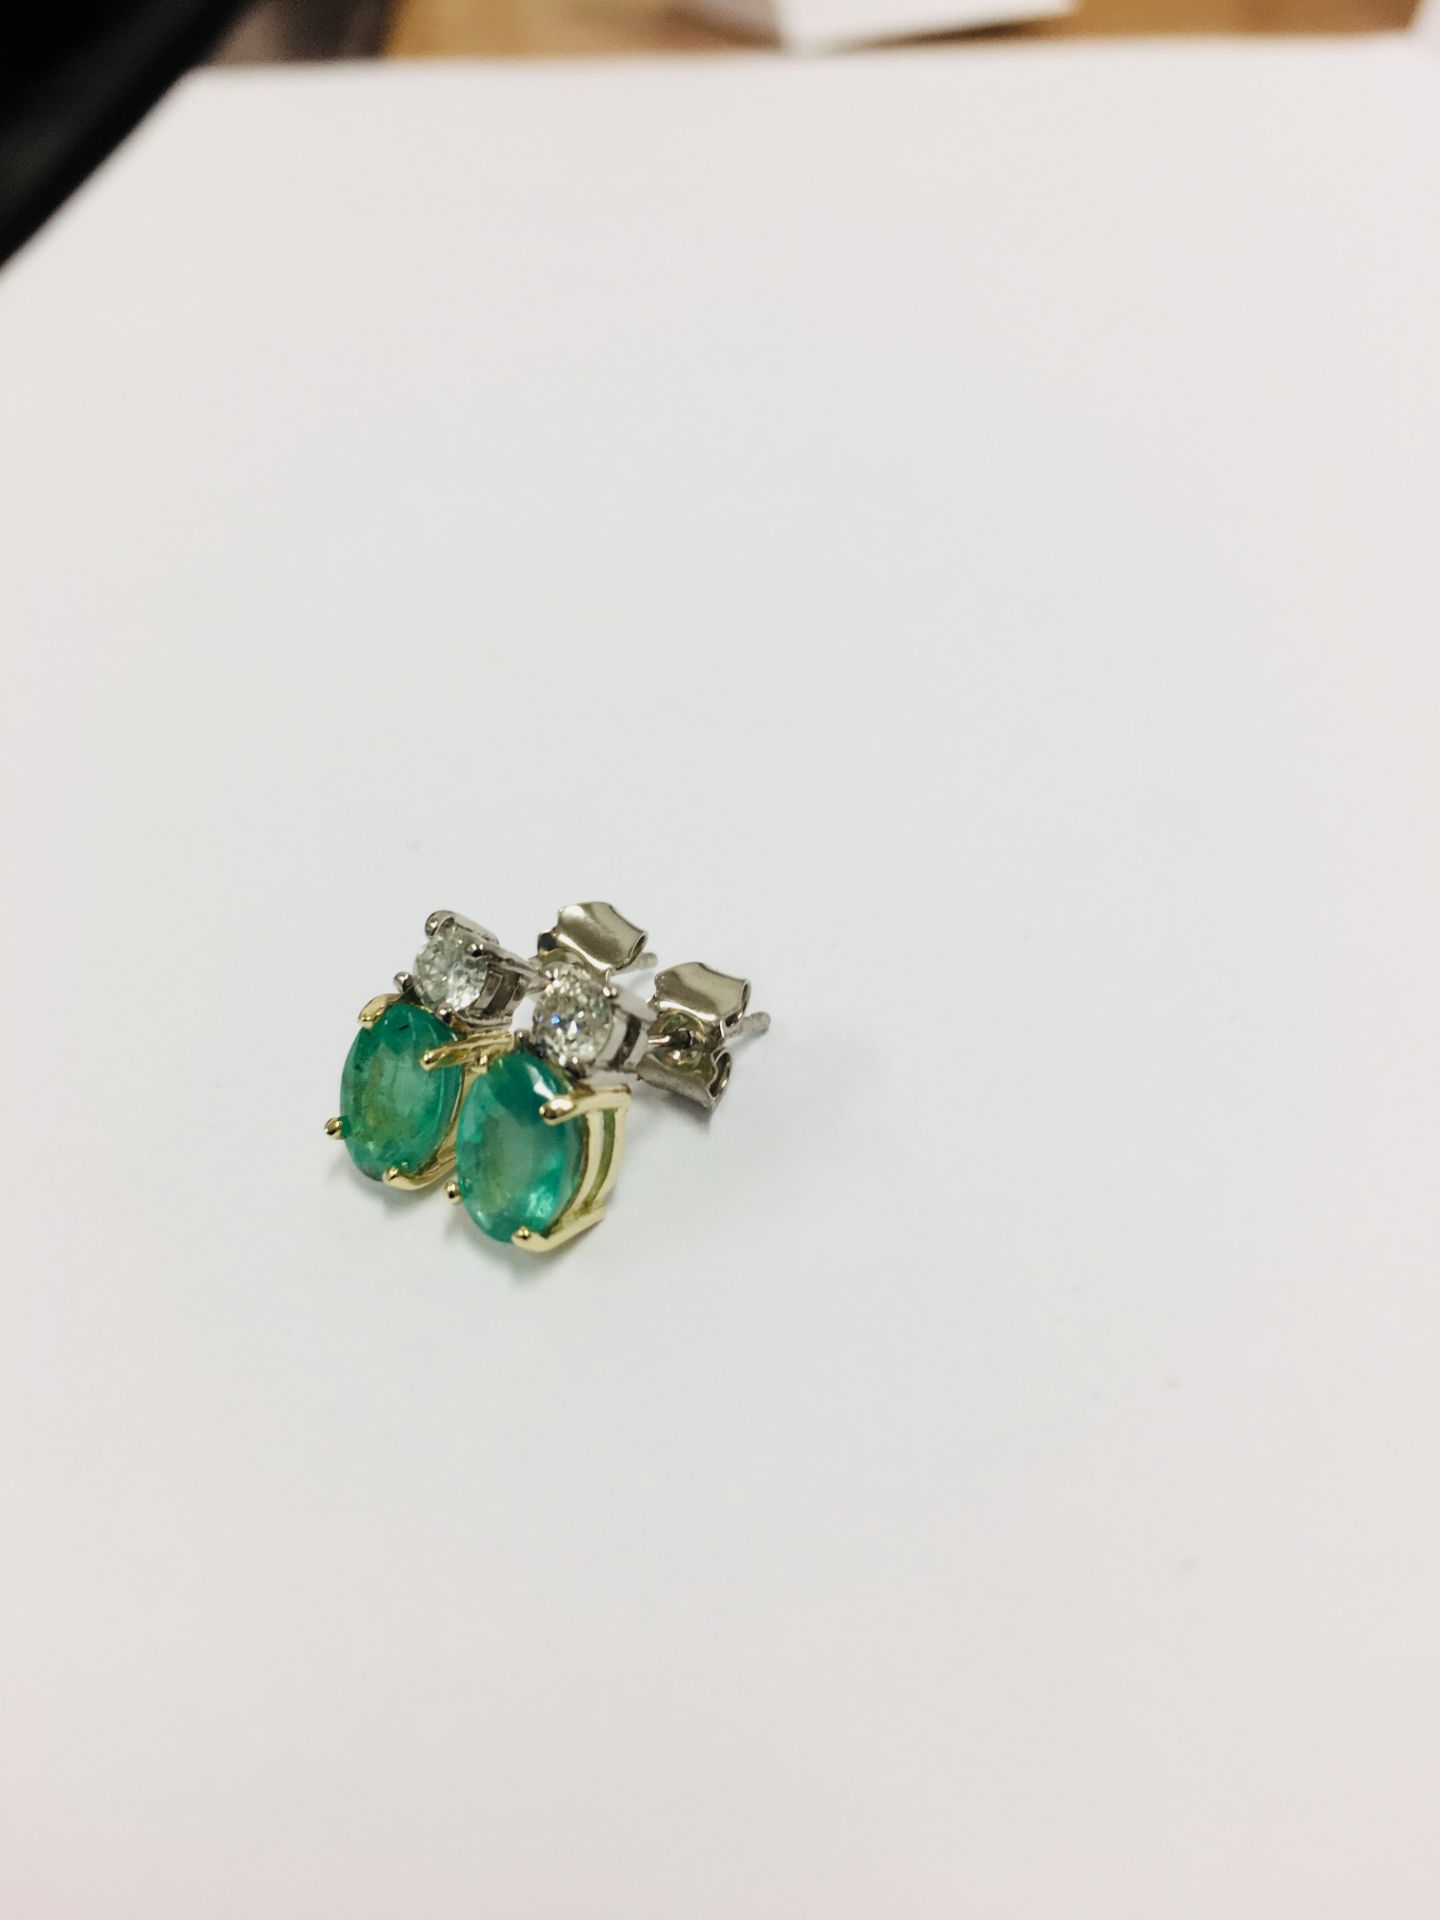 Emerald and diamond earrings 18ct gold,2ct emerald (natural),020ct diamond si2 I colour,3gms 18ct - Bild 3 aus 4